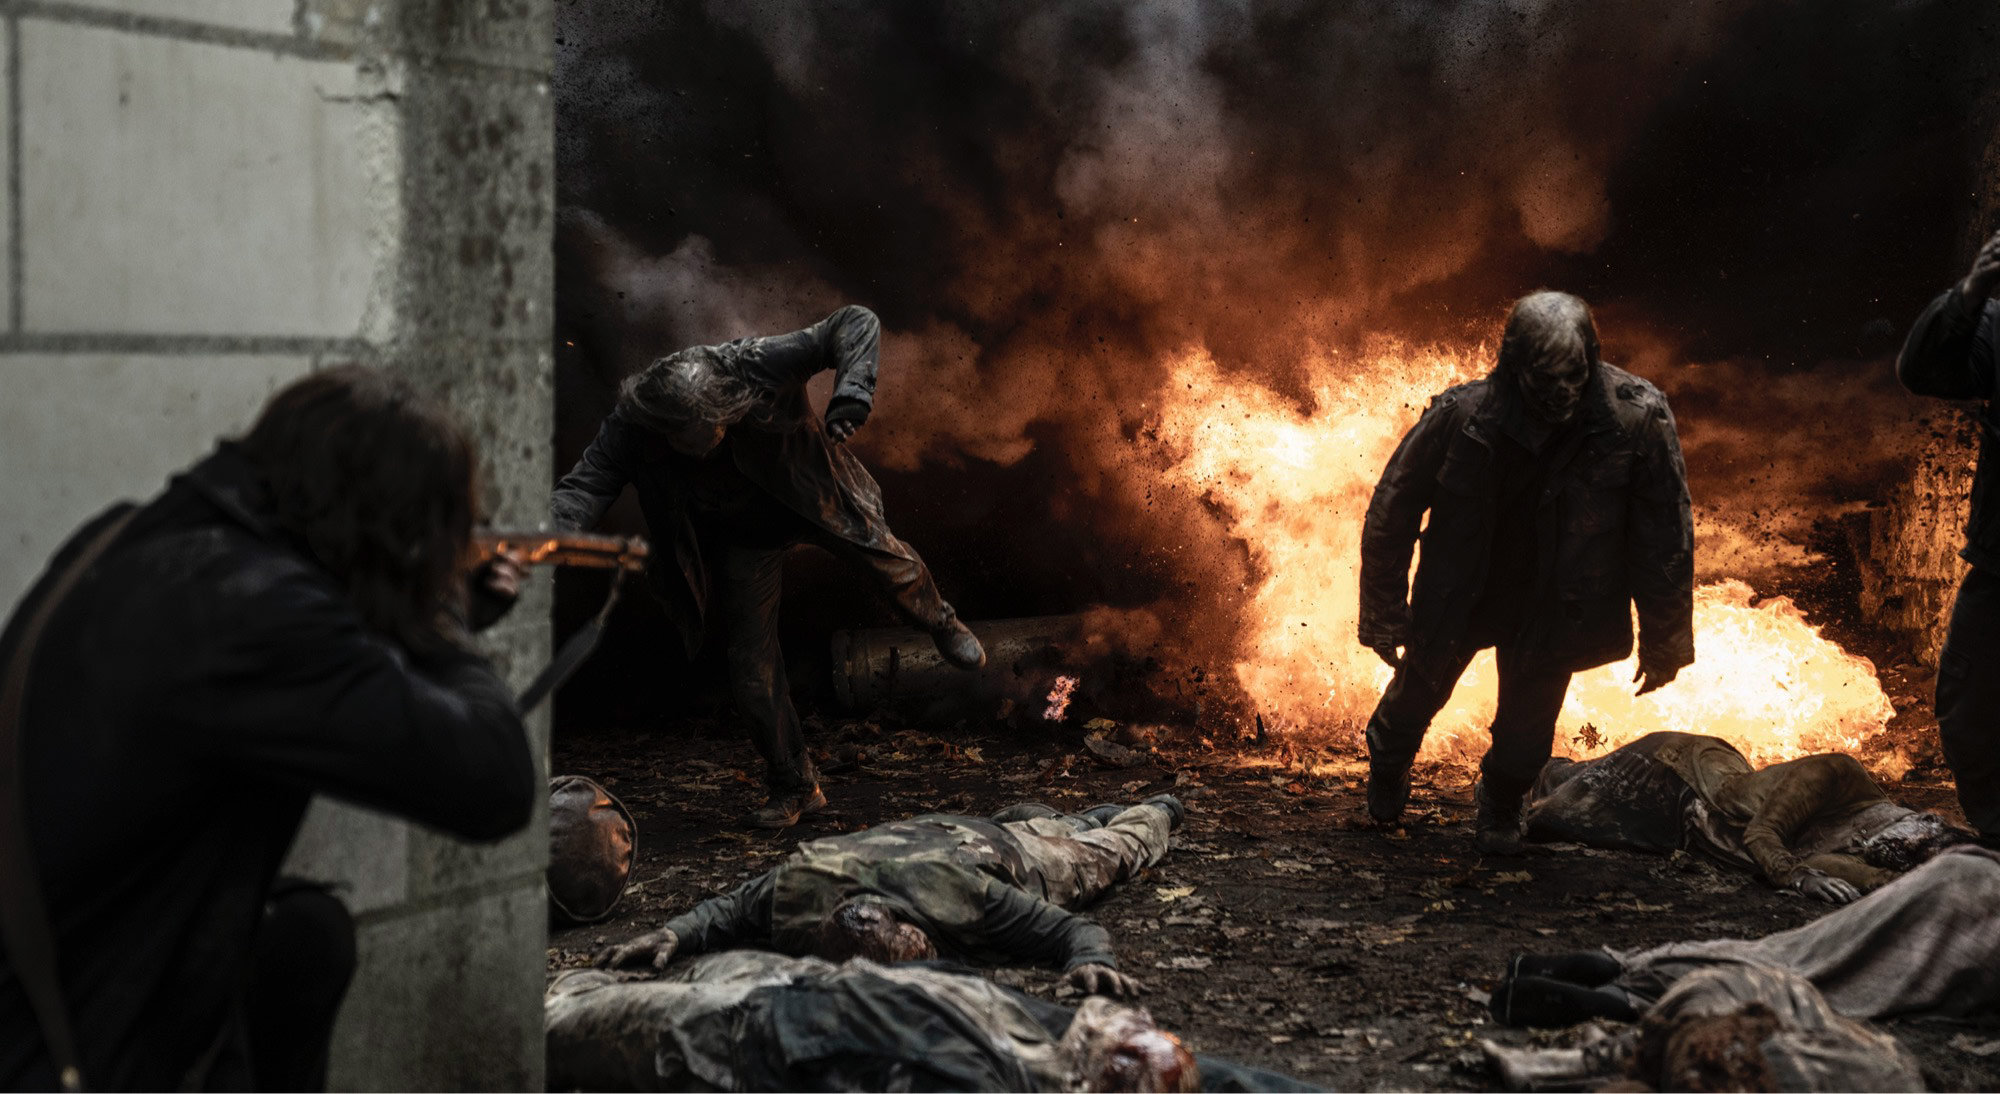 New “The Walking Dead” spinoff graded in DaVinci Resolve Studio